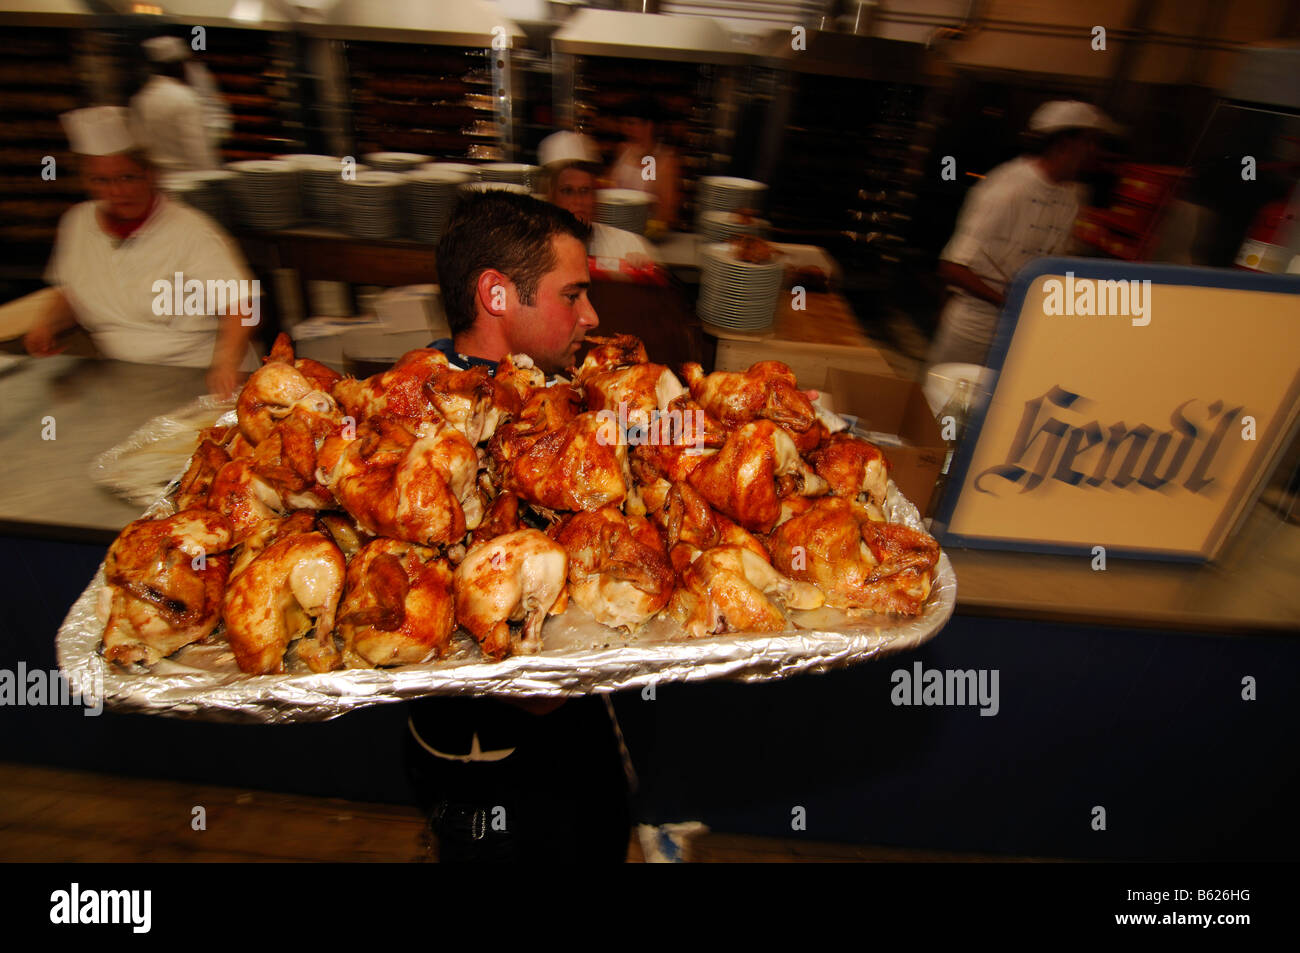 Waiter with roast chicken, Wies'n, October fest, Munich, Bavaria, Germany, Europe Stock Photo